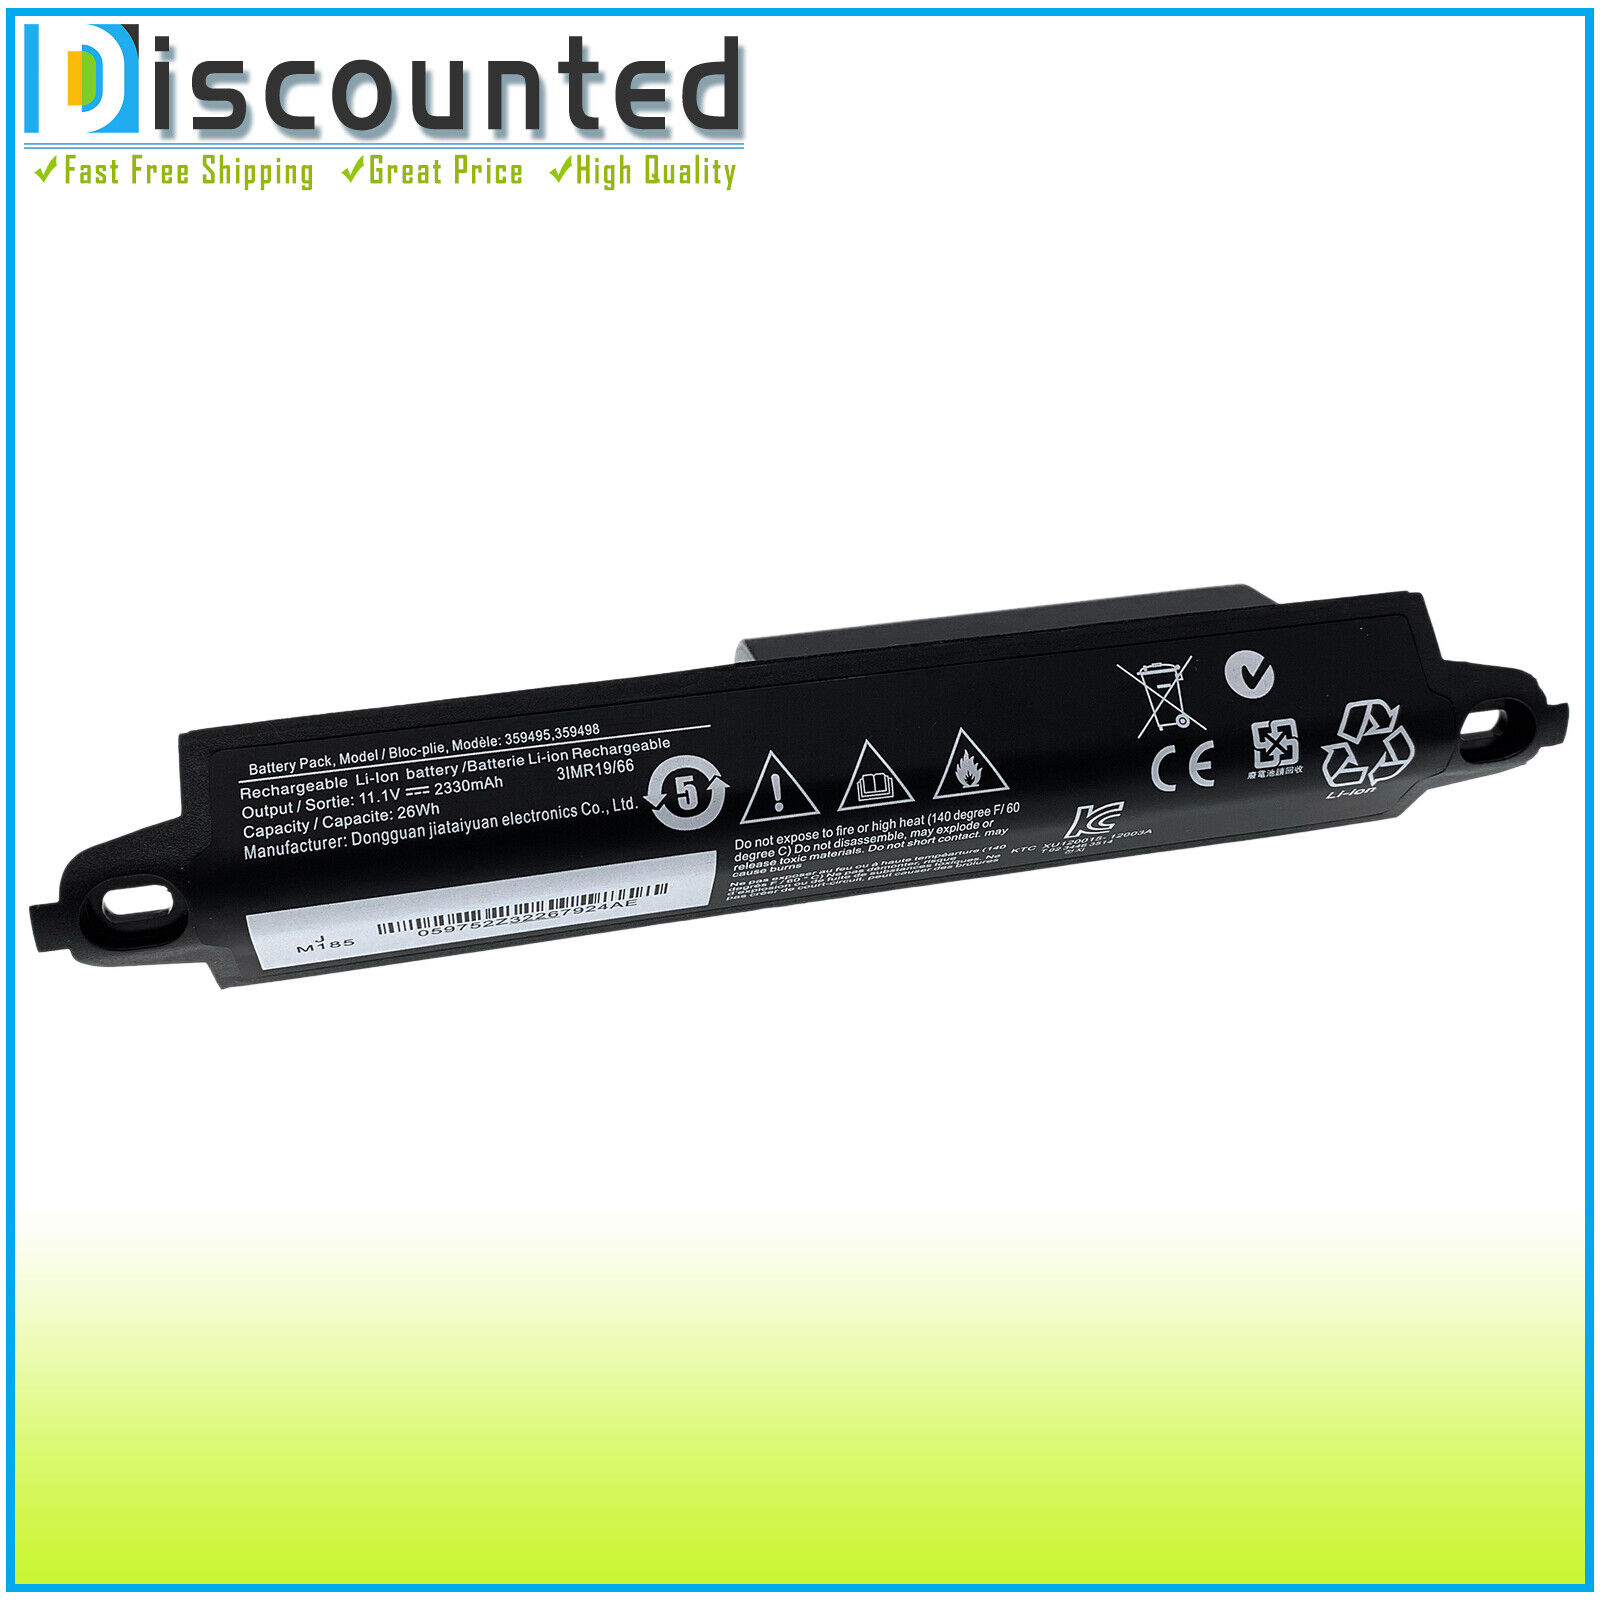 Battery for SoundLink II III 404600 330107A 359498 330107 330105 330105A 359495